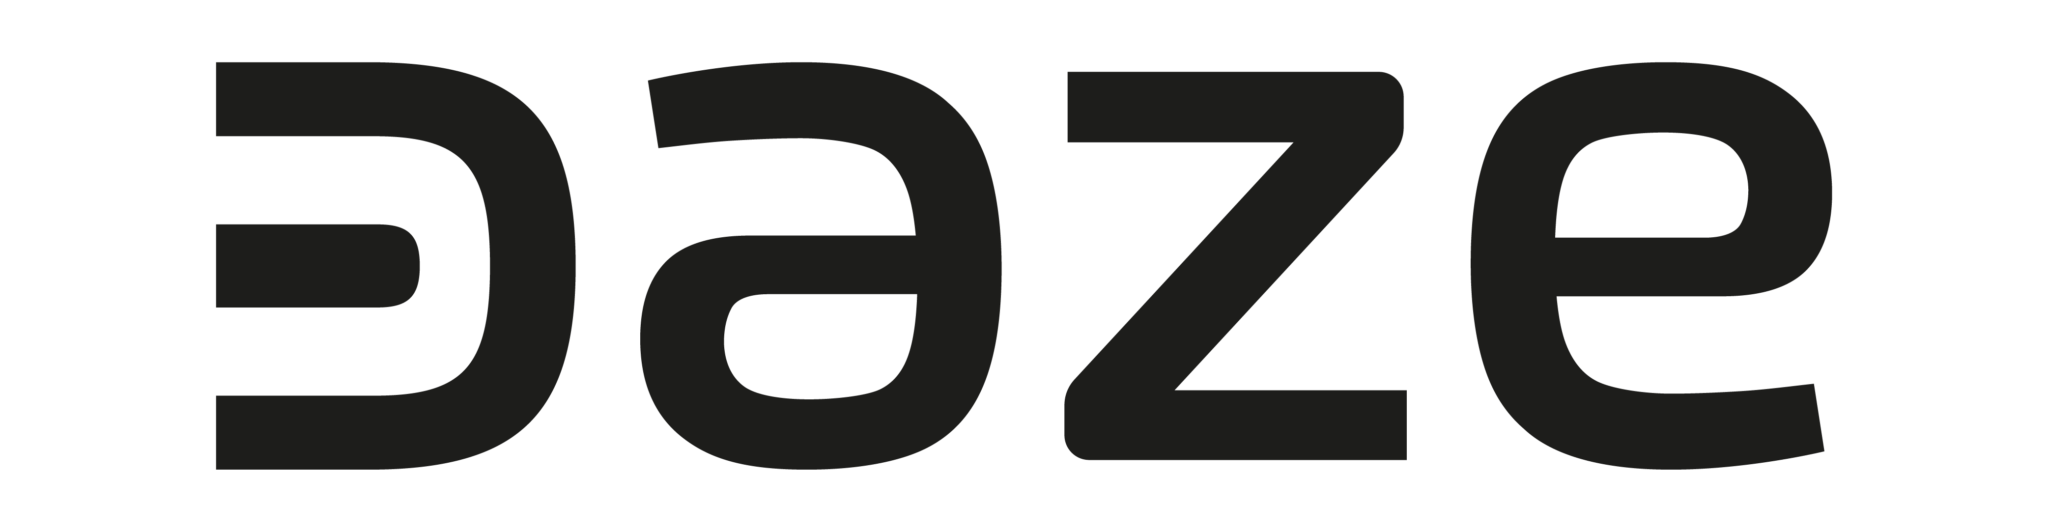 Daze-logo-nero